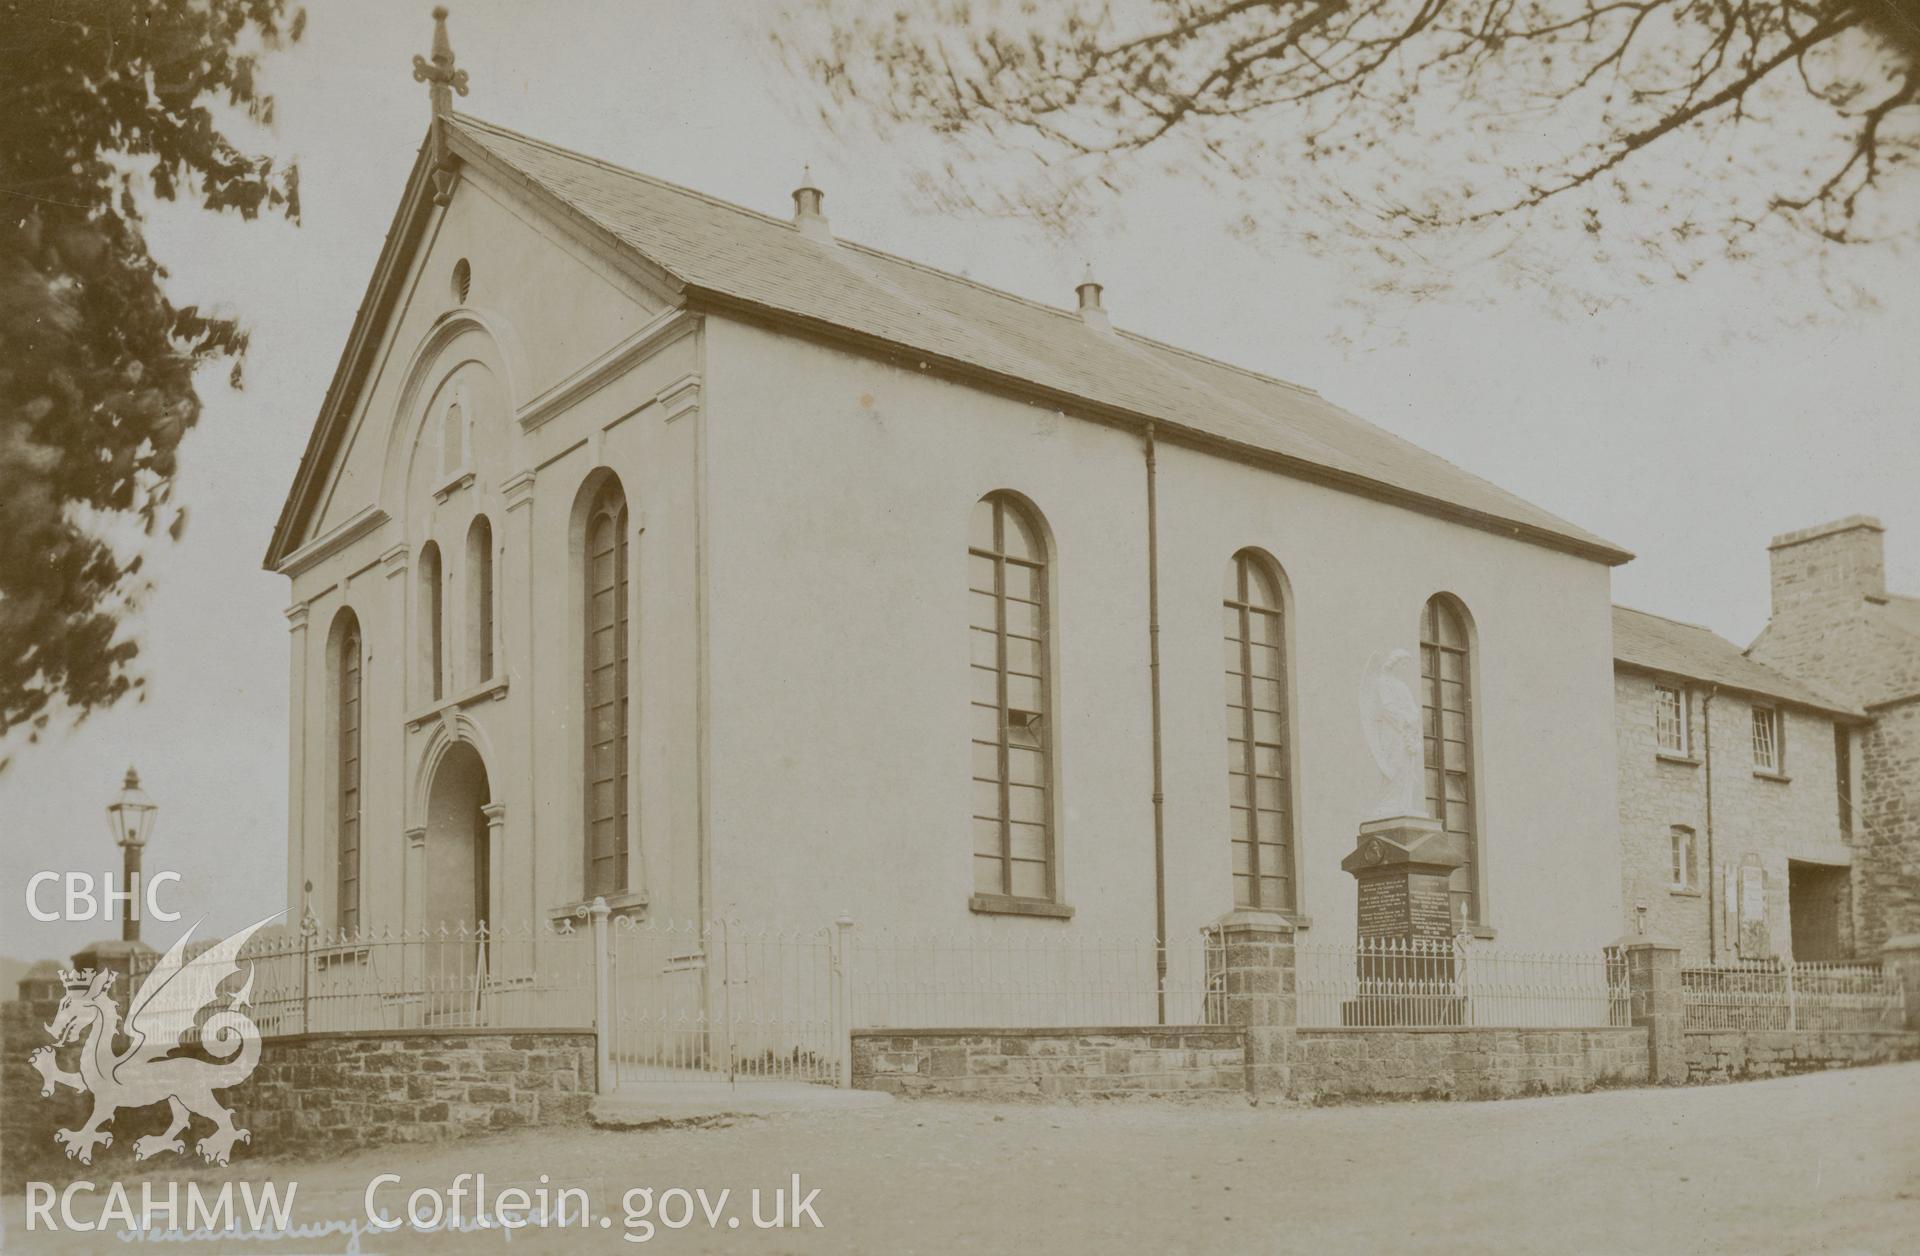 Digital copy of monochrome postcard showing exterior view of Neuadd-Lwyd Welsh Independent chapel, Neuadd-lwyd, Henfynyw, Aberaeron. Loaned for copying by Thomas Lloyd.